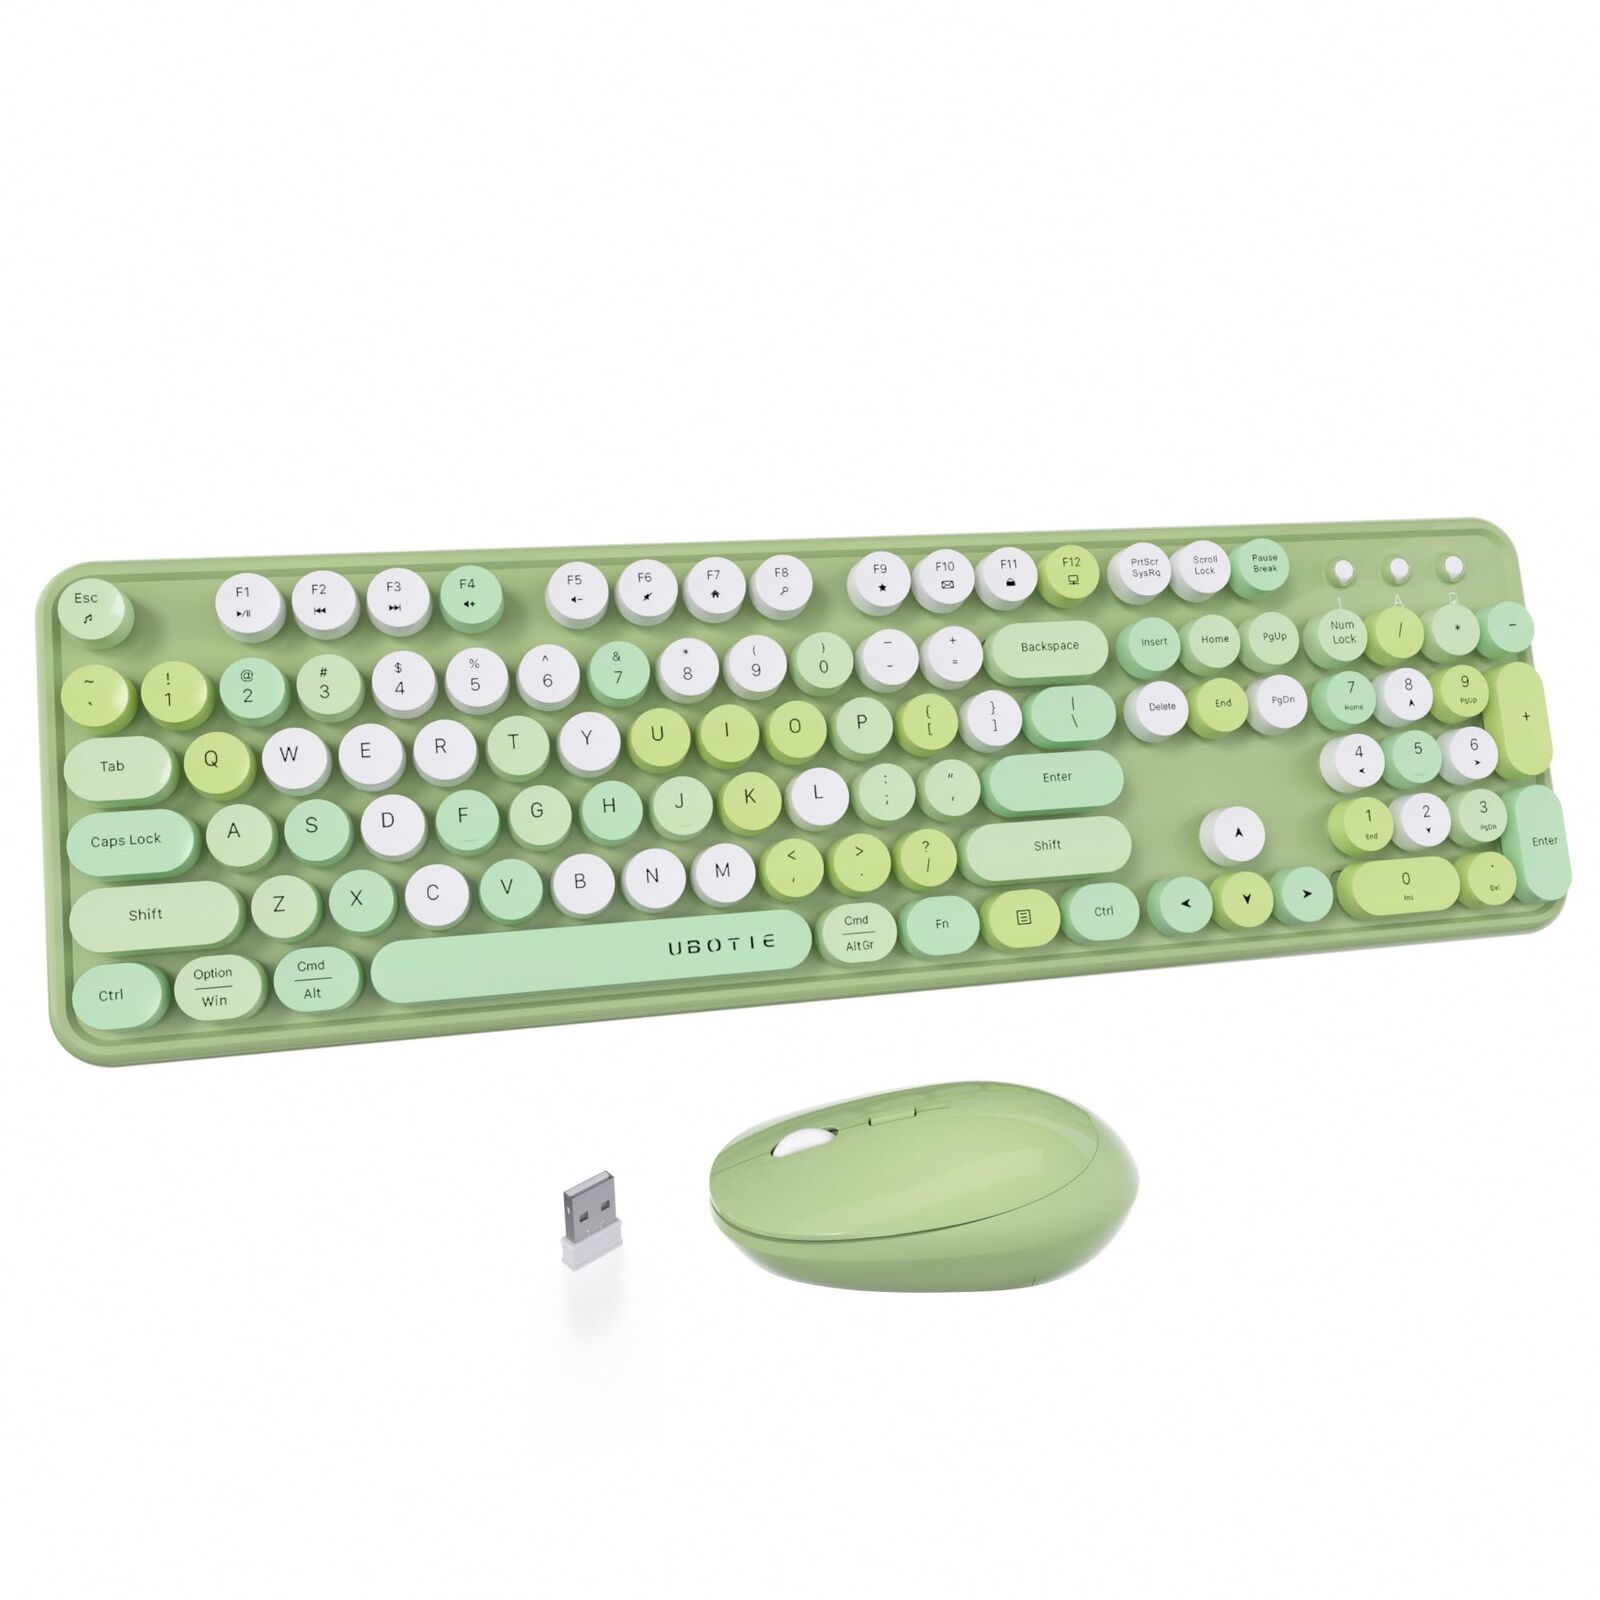 UBOTIE Colorful Computer Wireless Keyboards Mouse Combos, Typewriter Flexible Ke